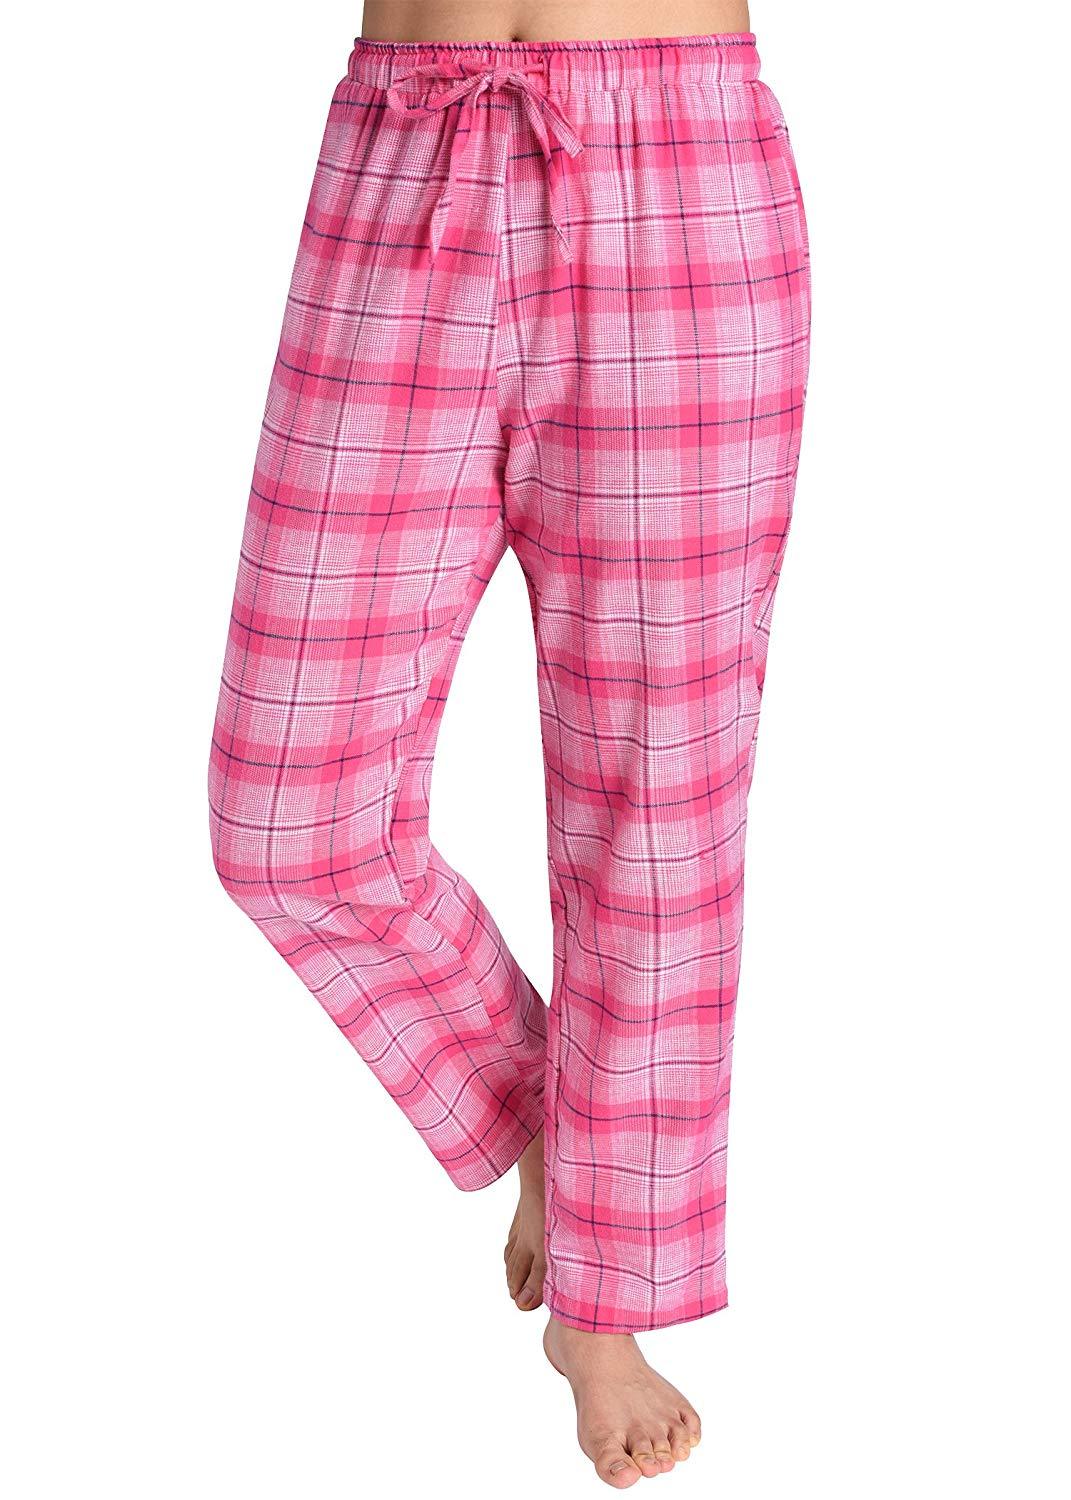 Women's Pajama Bottoms Cotton Plaid Lounge Pants Long Sleepwear Pajama Pants